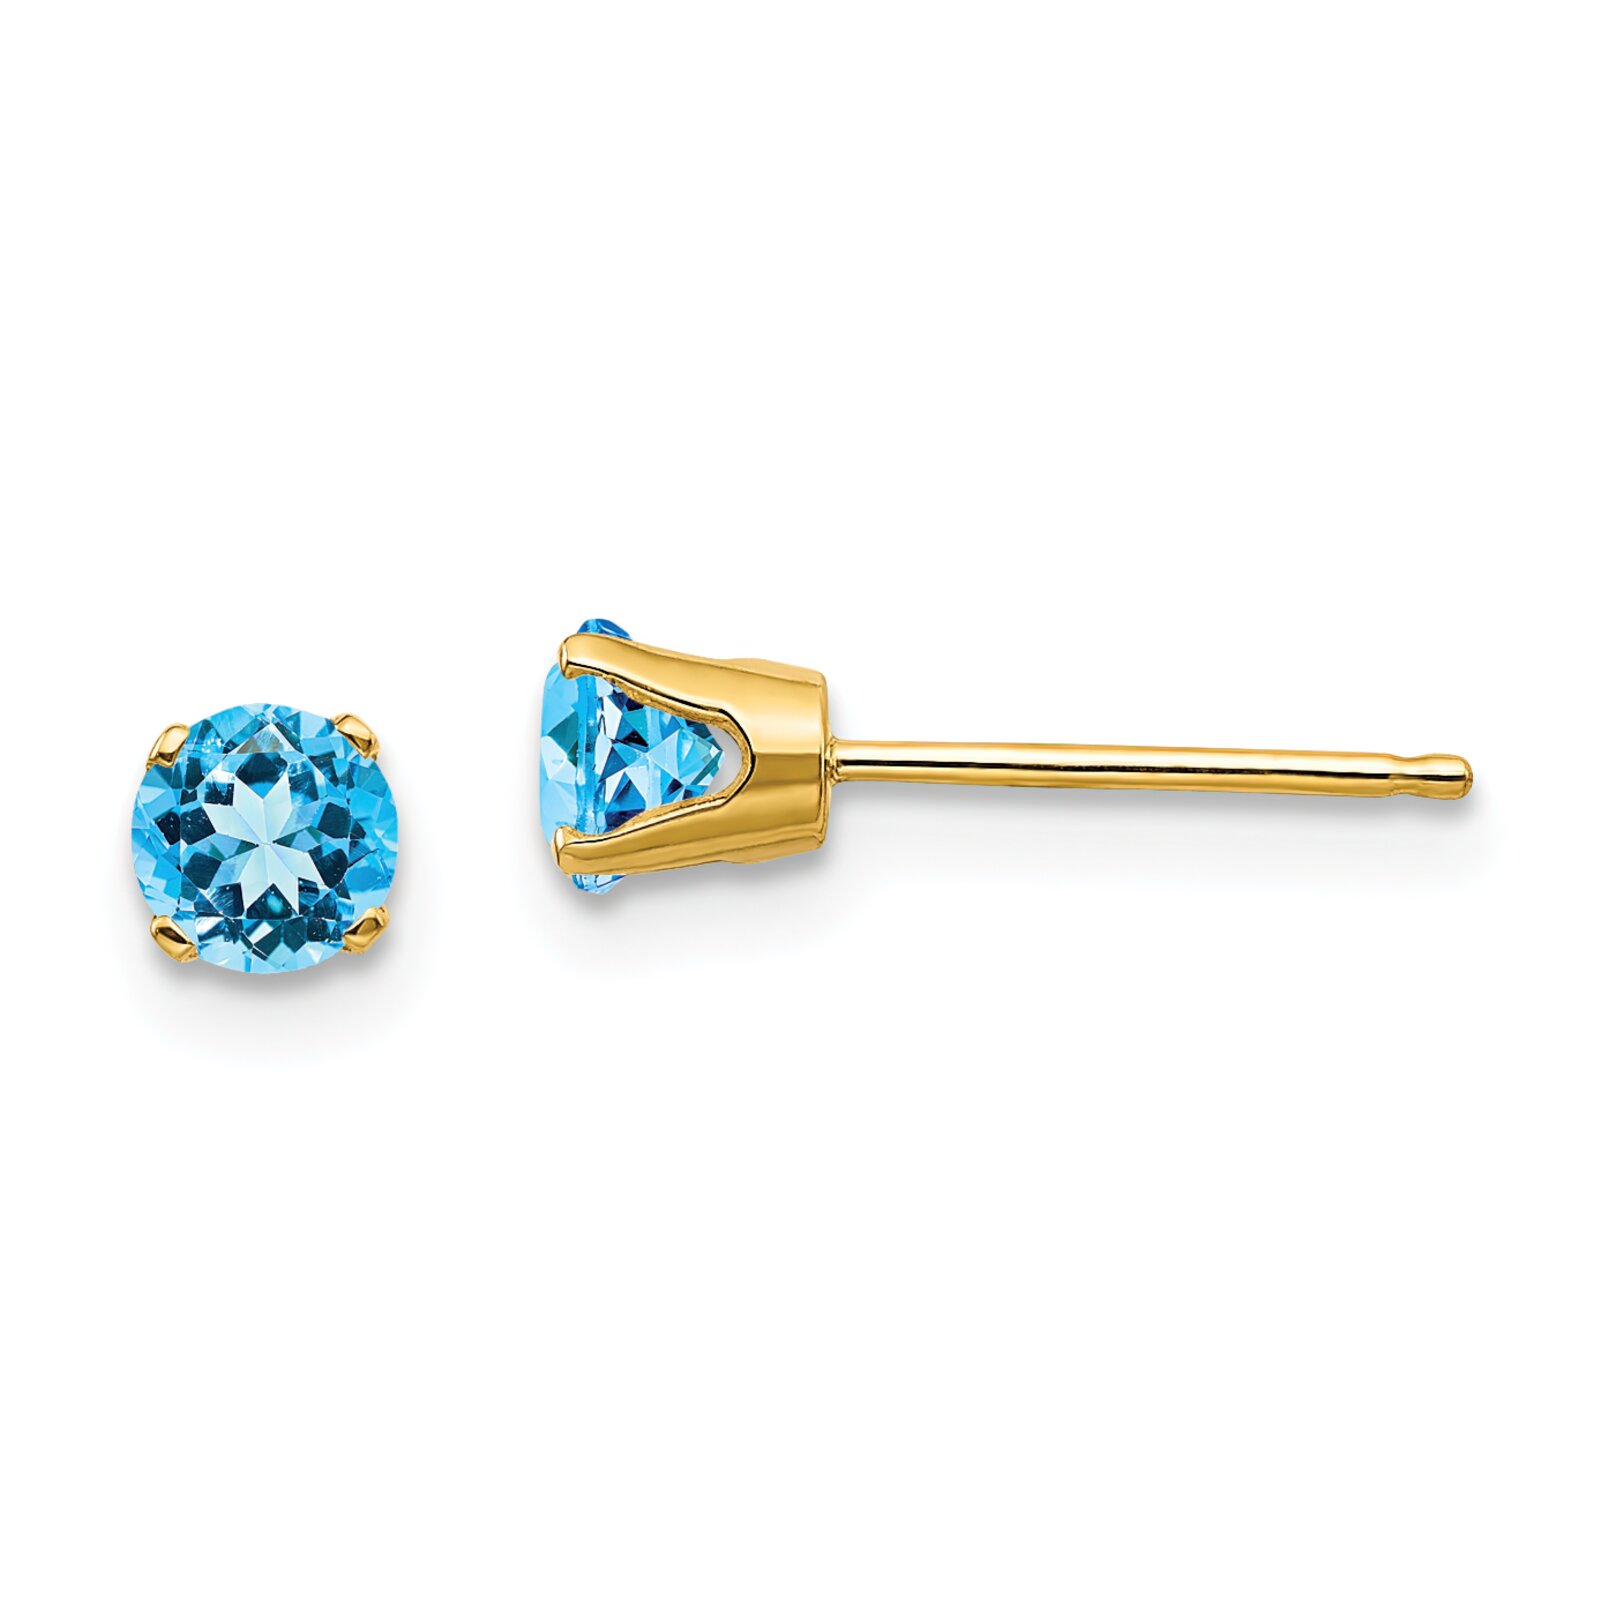 Findingking 14K Gold Blue Topaz December Earrings Jewelry